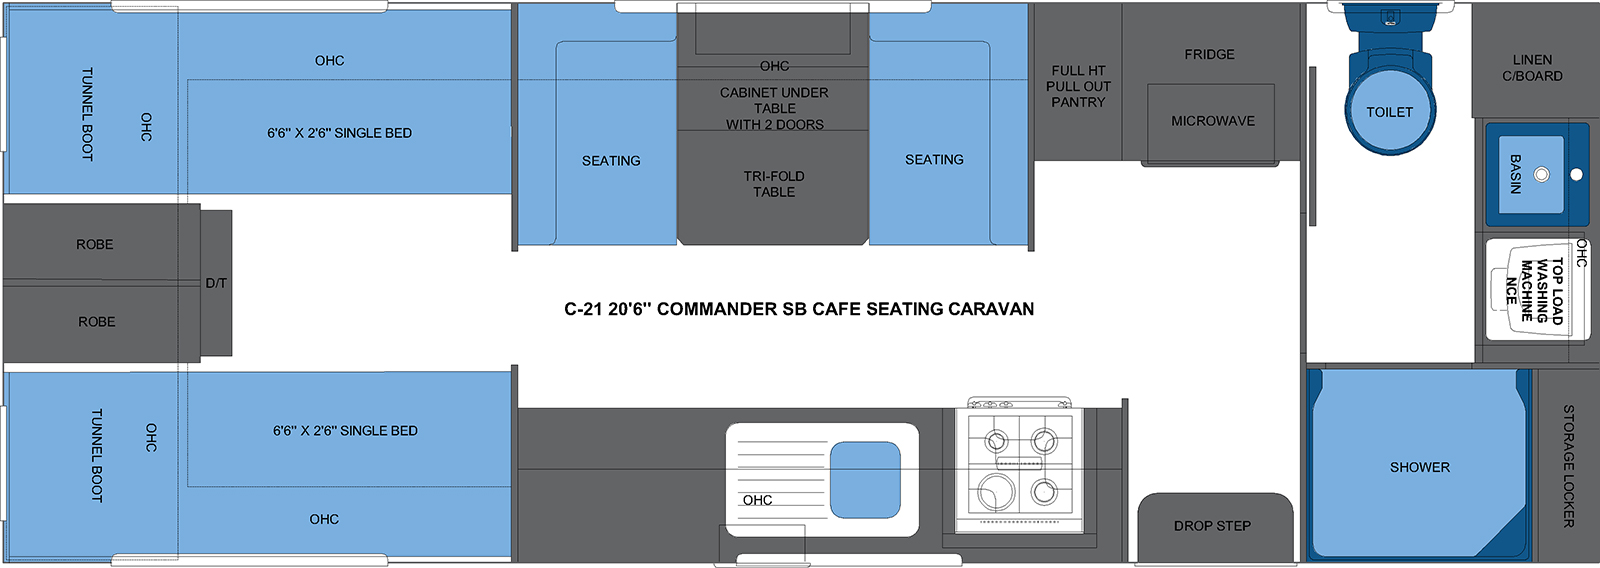 C-21 20'6 COMMANDER SB CAFE SEATING CARAVAN